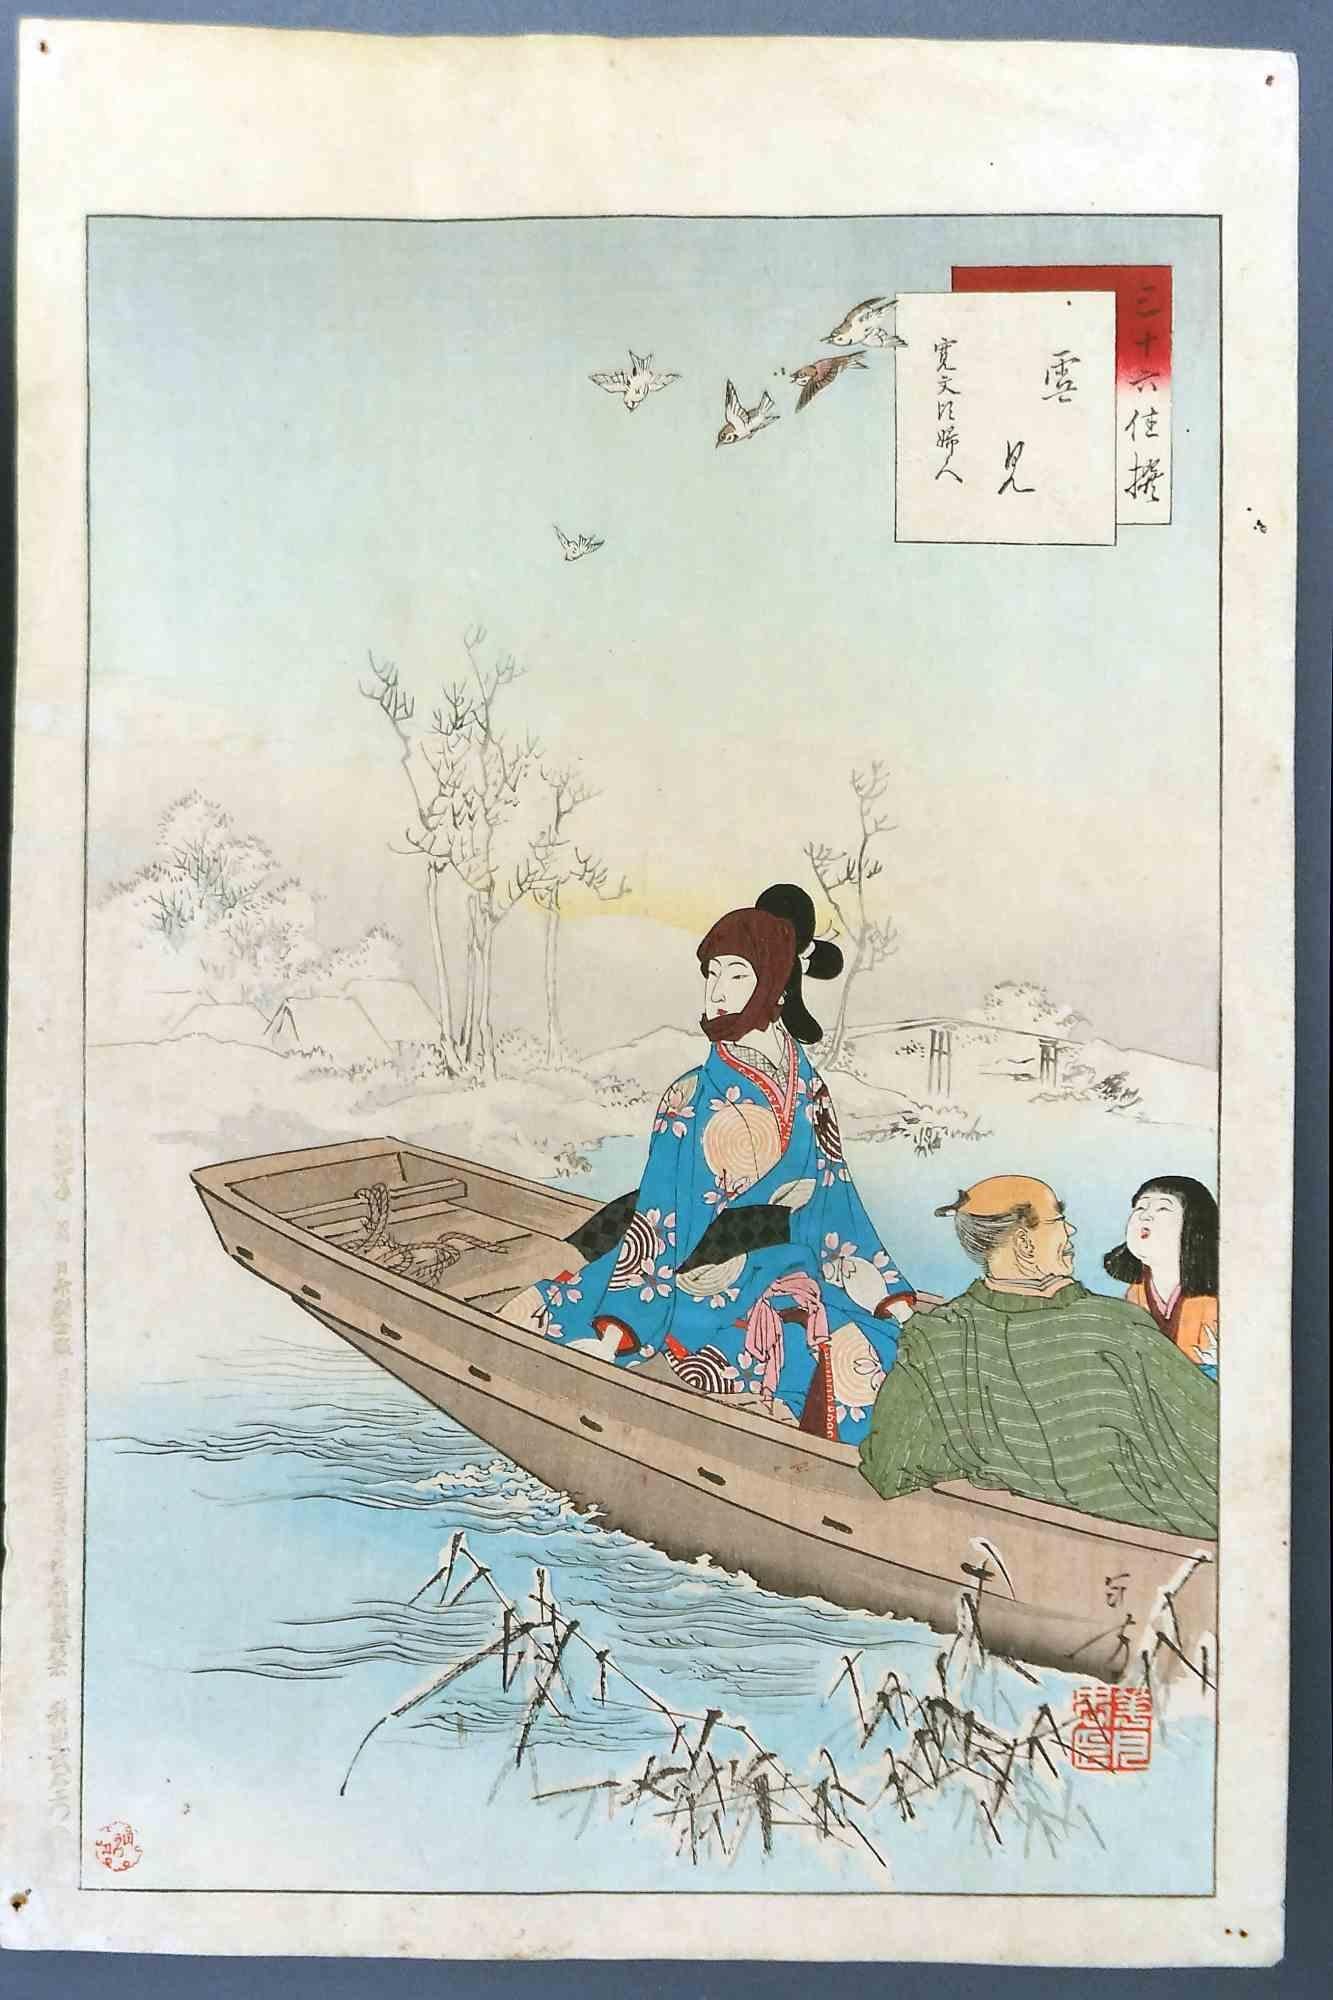 Family Boat Trip on the Marsch - Woodcut by Mizuno Toshikata - 1890s